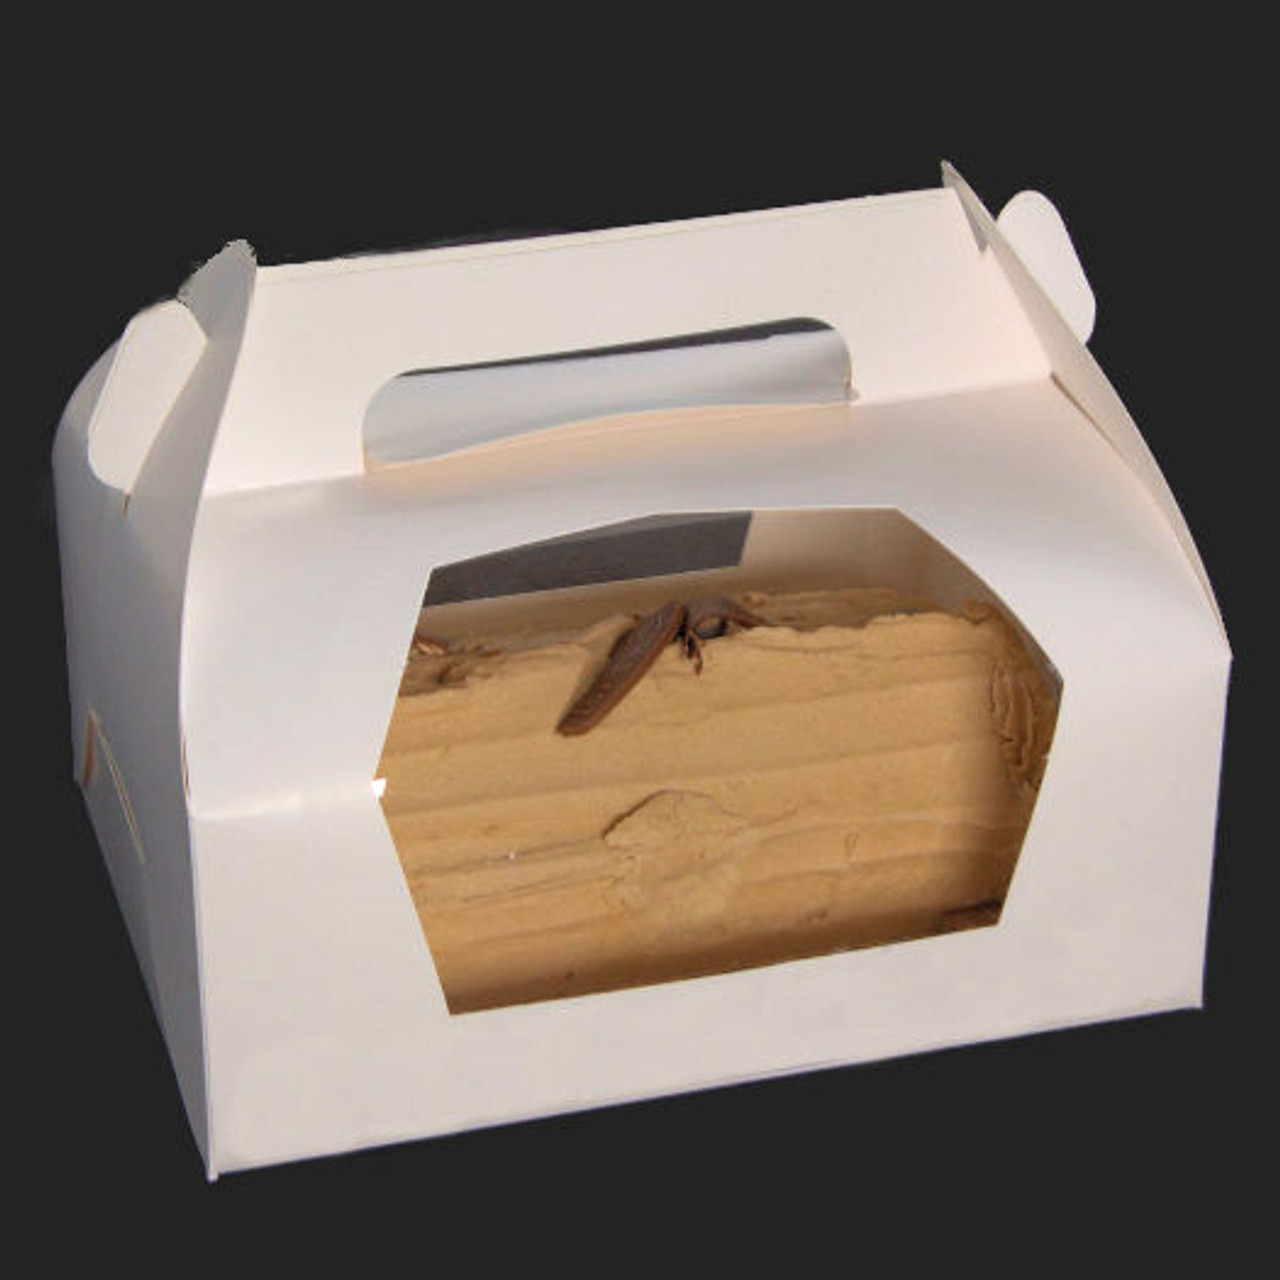 2 Cake-yule log boxes -35x11x11 cm - ScrapCooking®